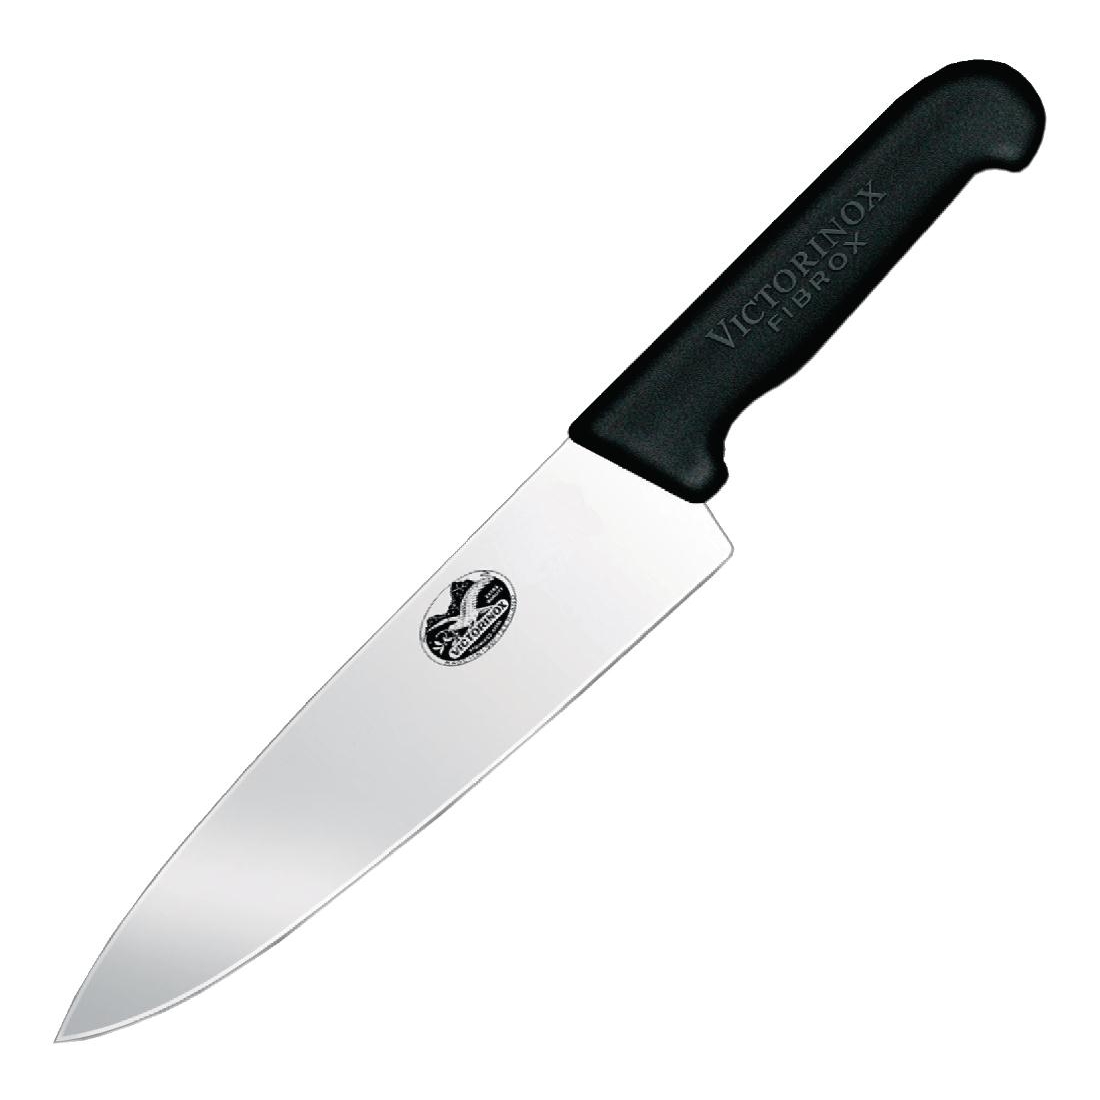 Victorinox Wide Blade Chefs Knife 20.5cm